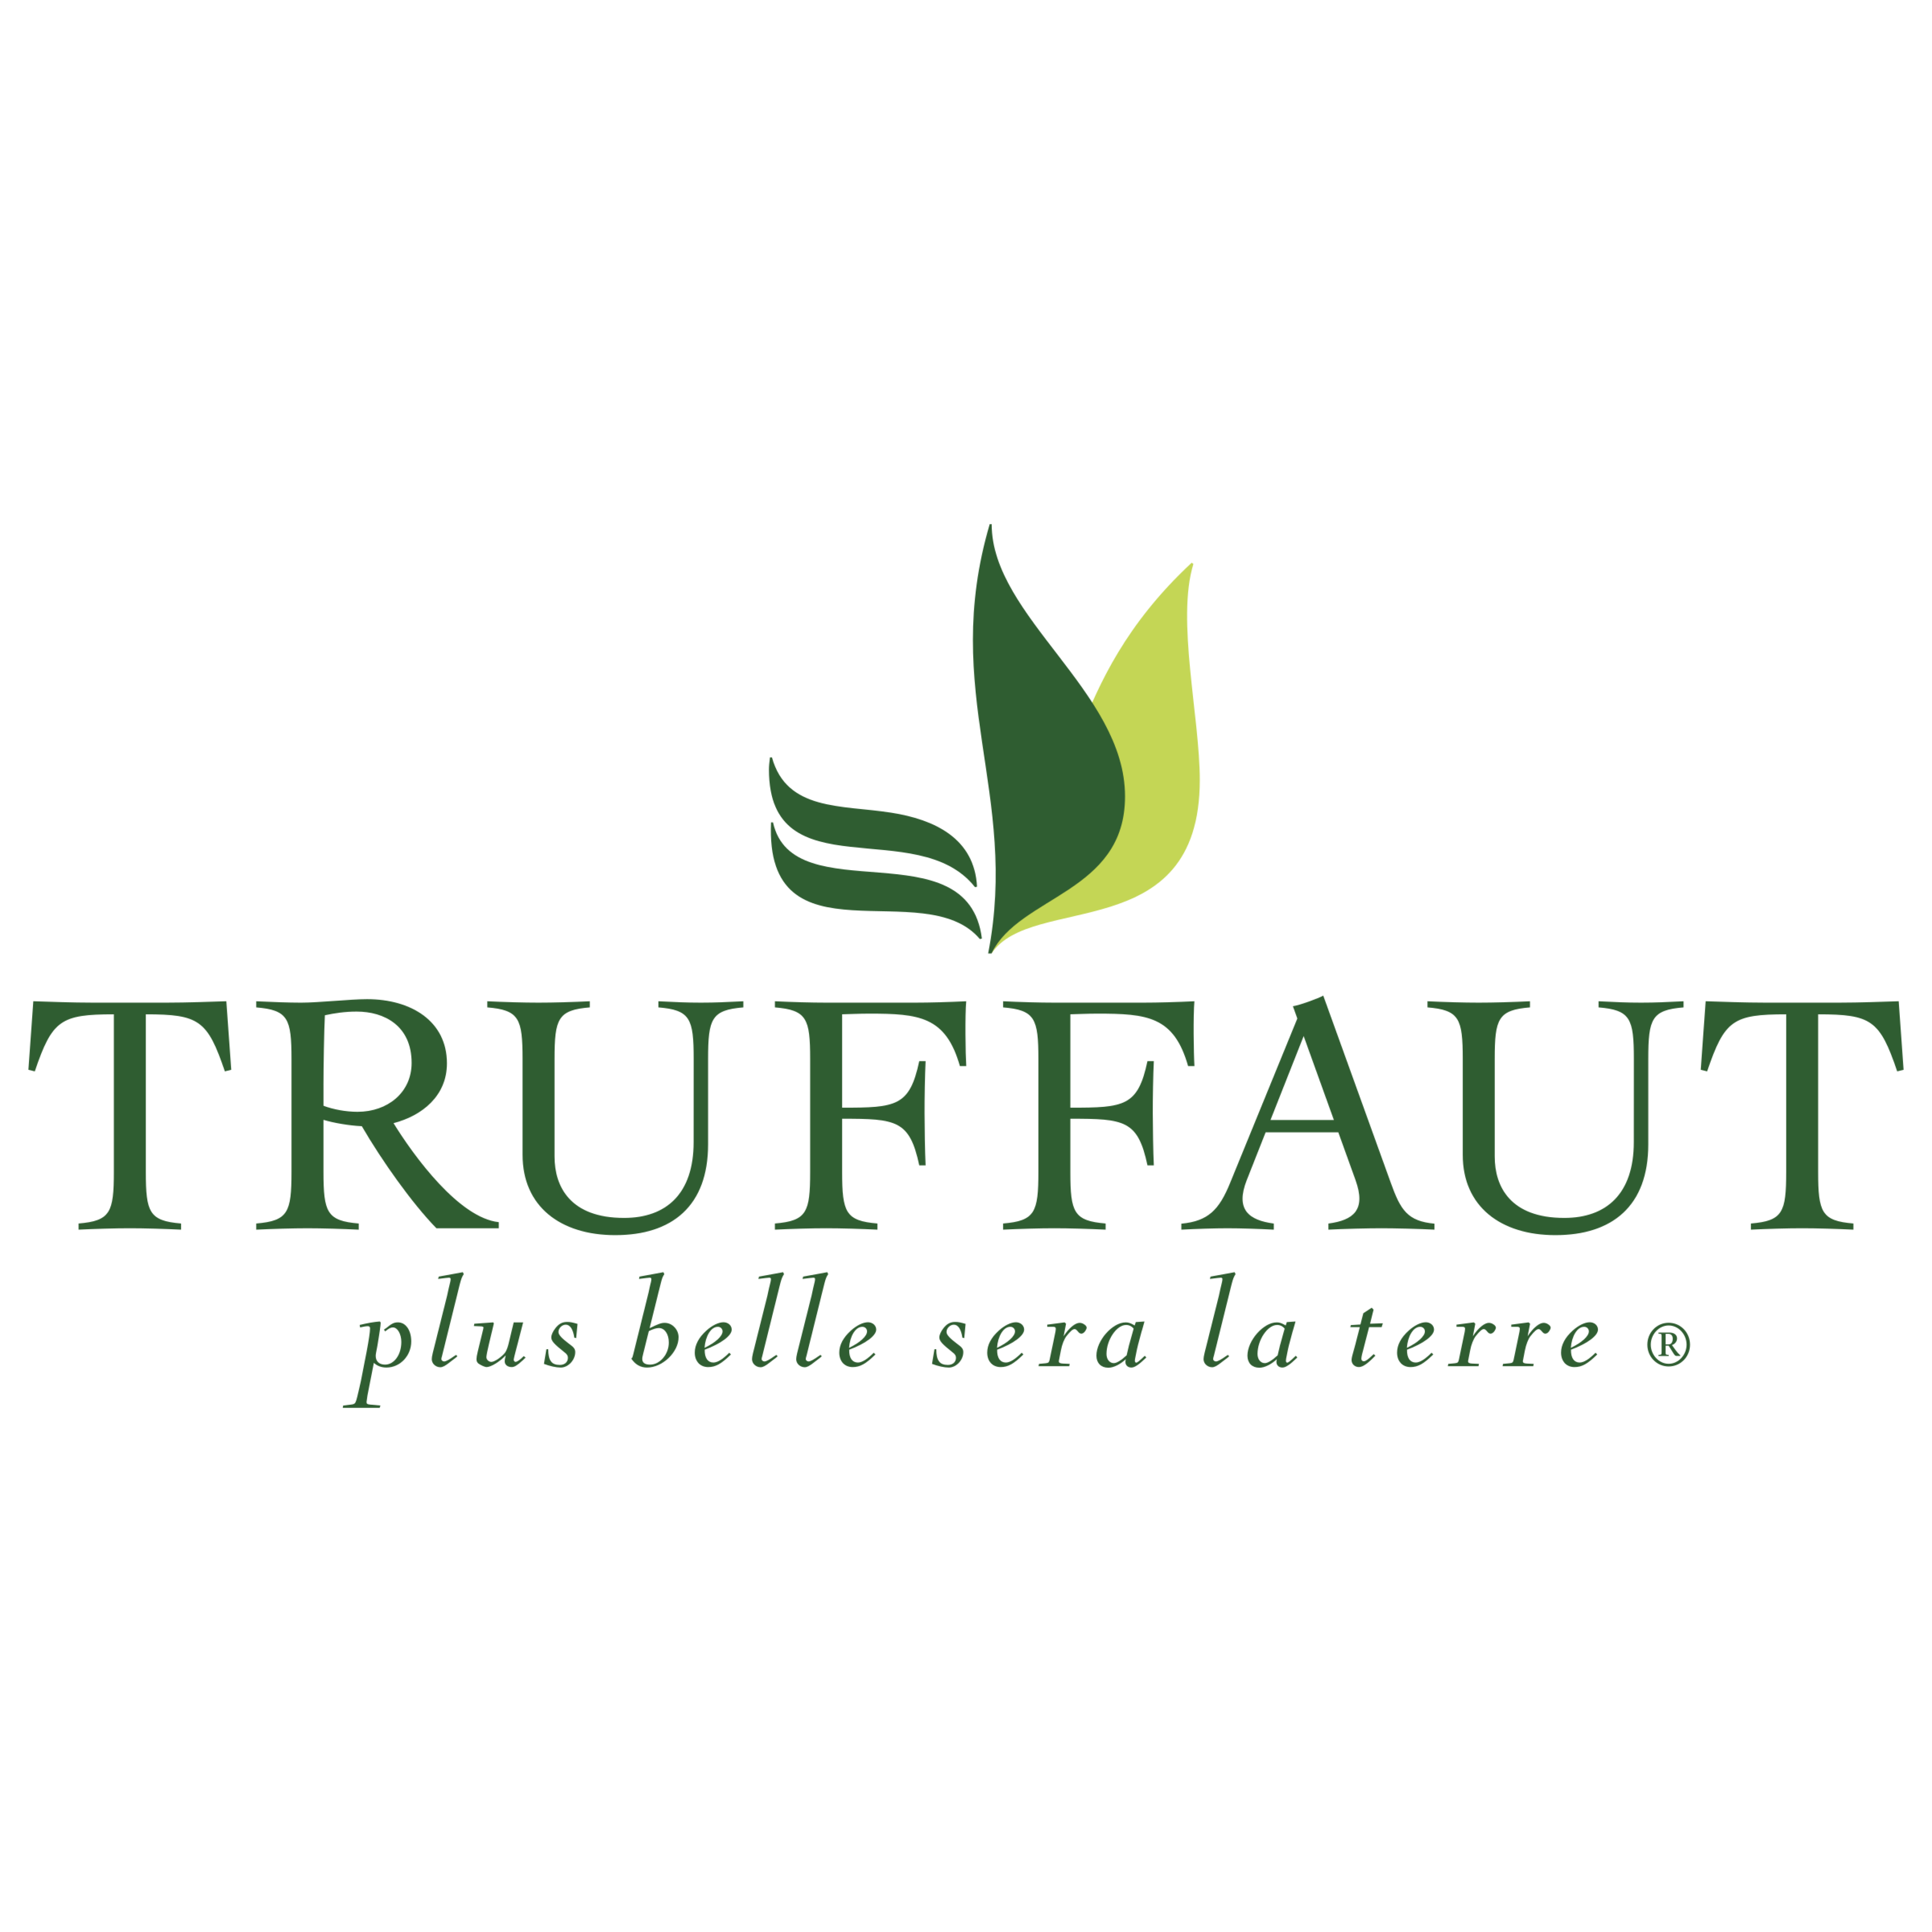 truffaut-1-logo-png-transparent